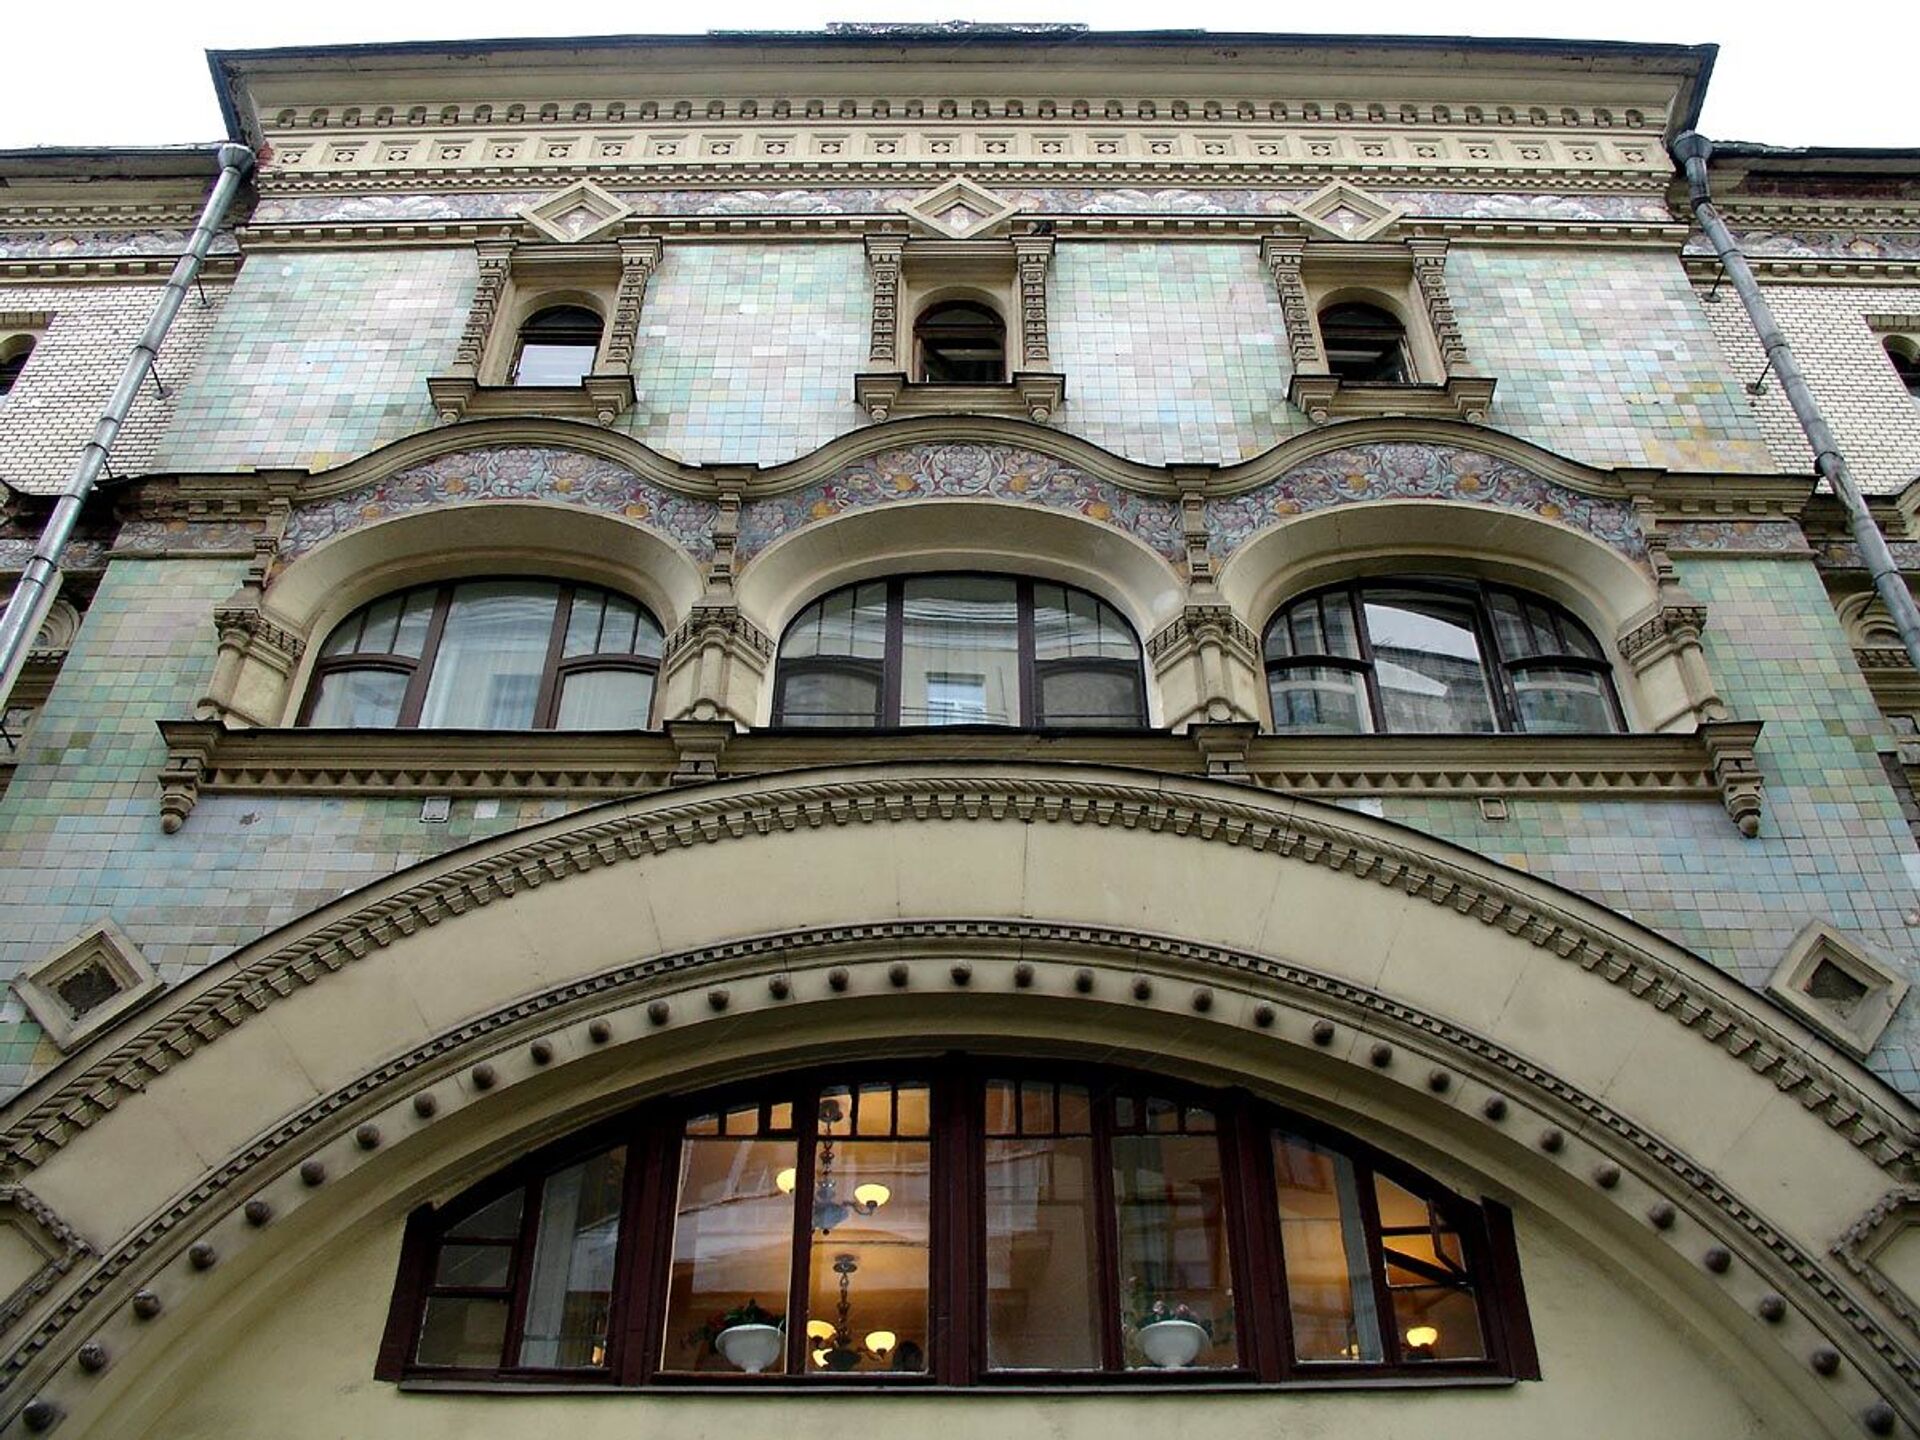 Архитектура која плени: Двадесет најнеобичнијих грађевина у Москви /фото/ - Sputnik Србија, 1920, 07.02.2021